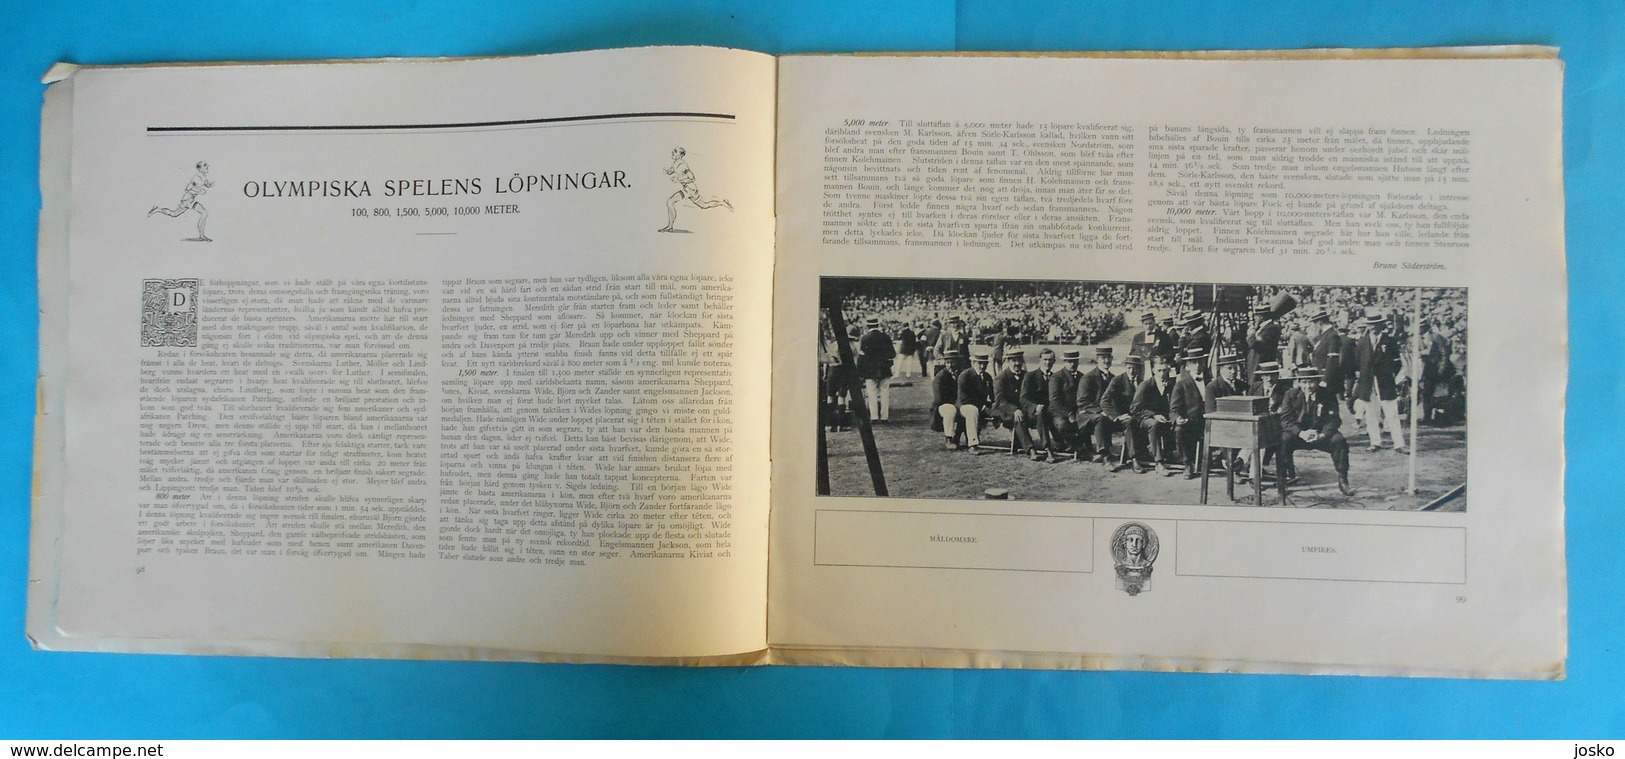 ATHLETICS On OLYMPIC GAMES 1912 STOCKHOLM - Original Vintage Programme * Athletisme Atletismo Atletica Athletik Athletic - Bücher